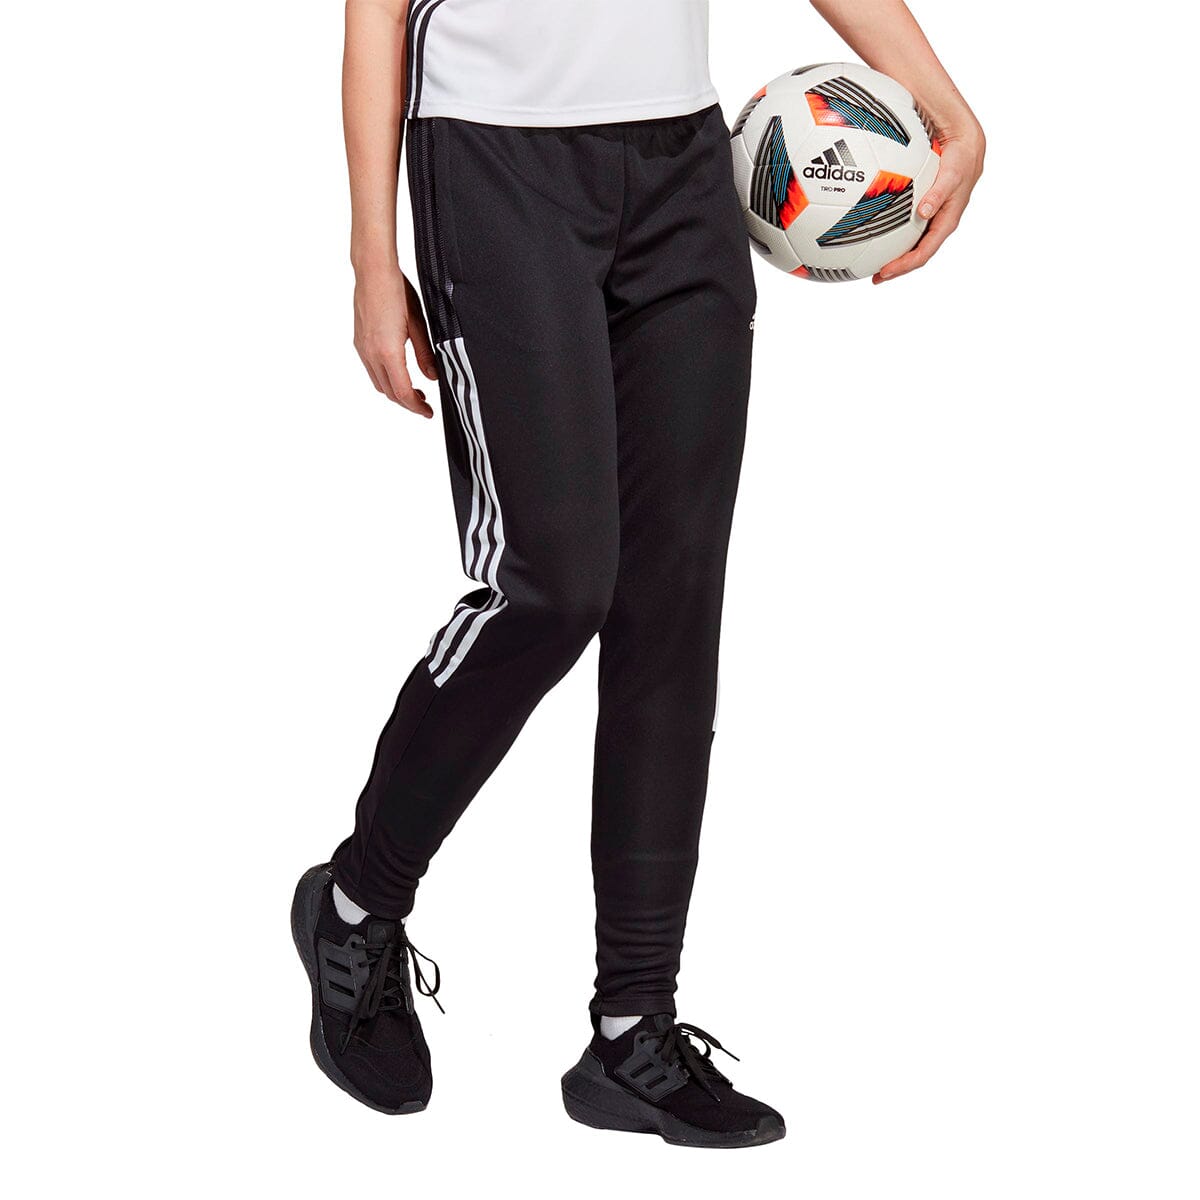 adidas Women's Tiro 21 Training Pants - Goal Kick Soccer